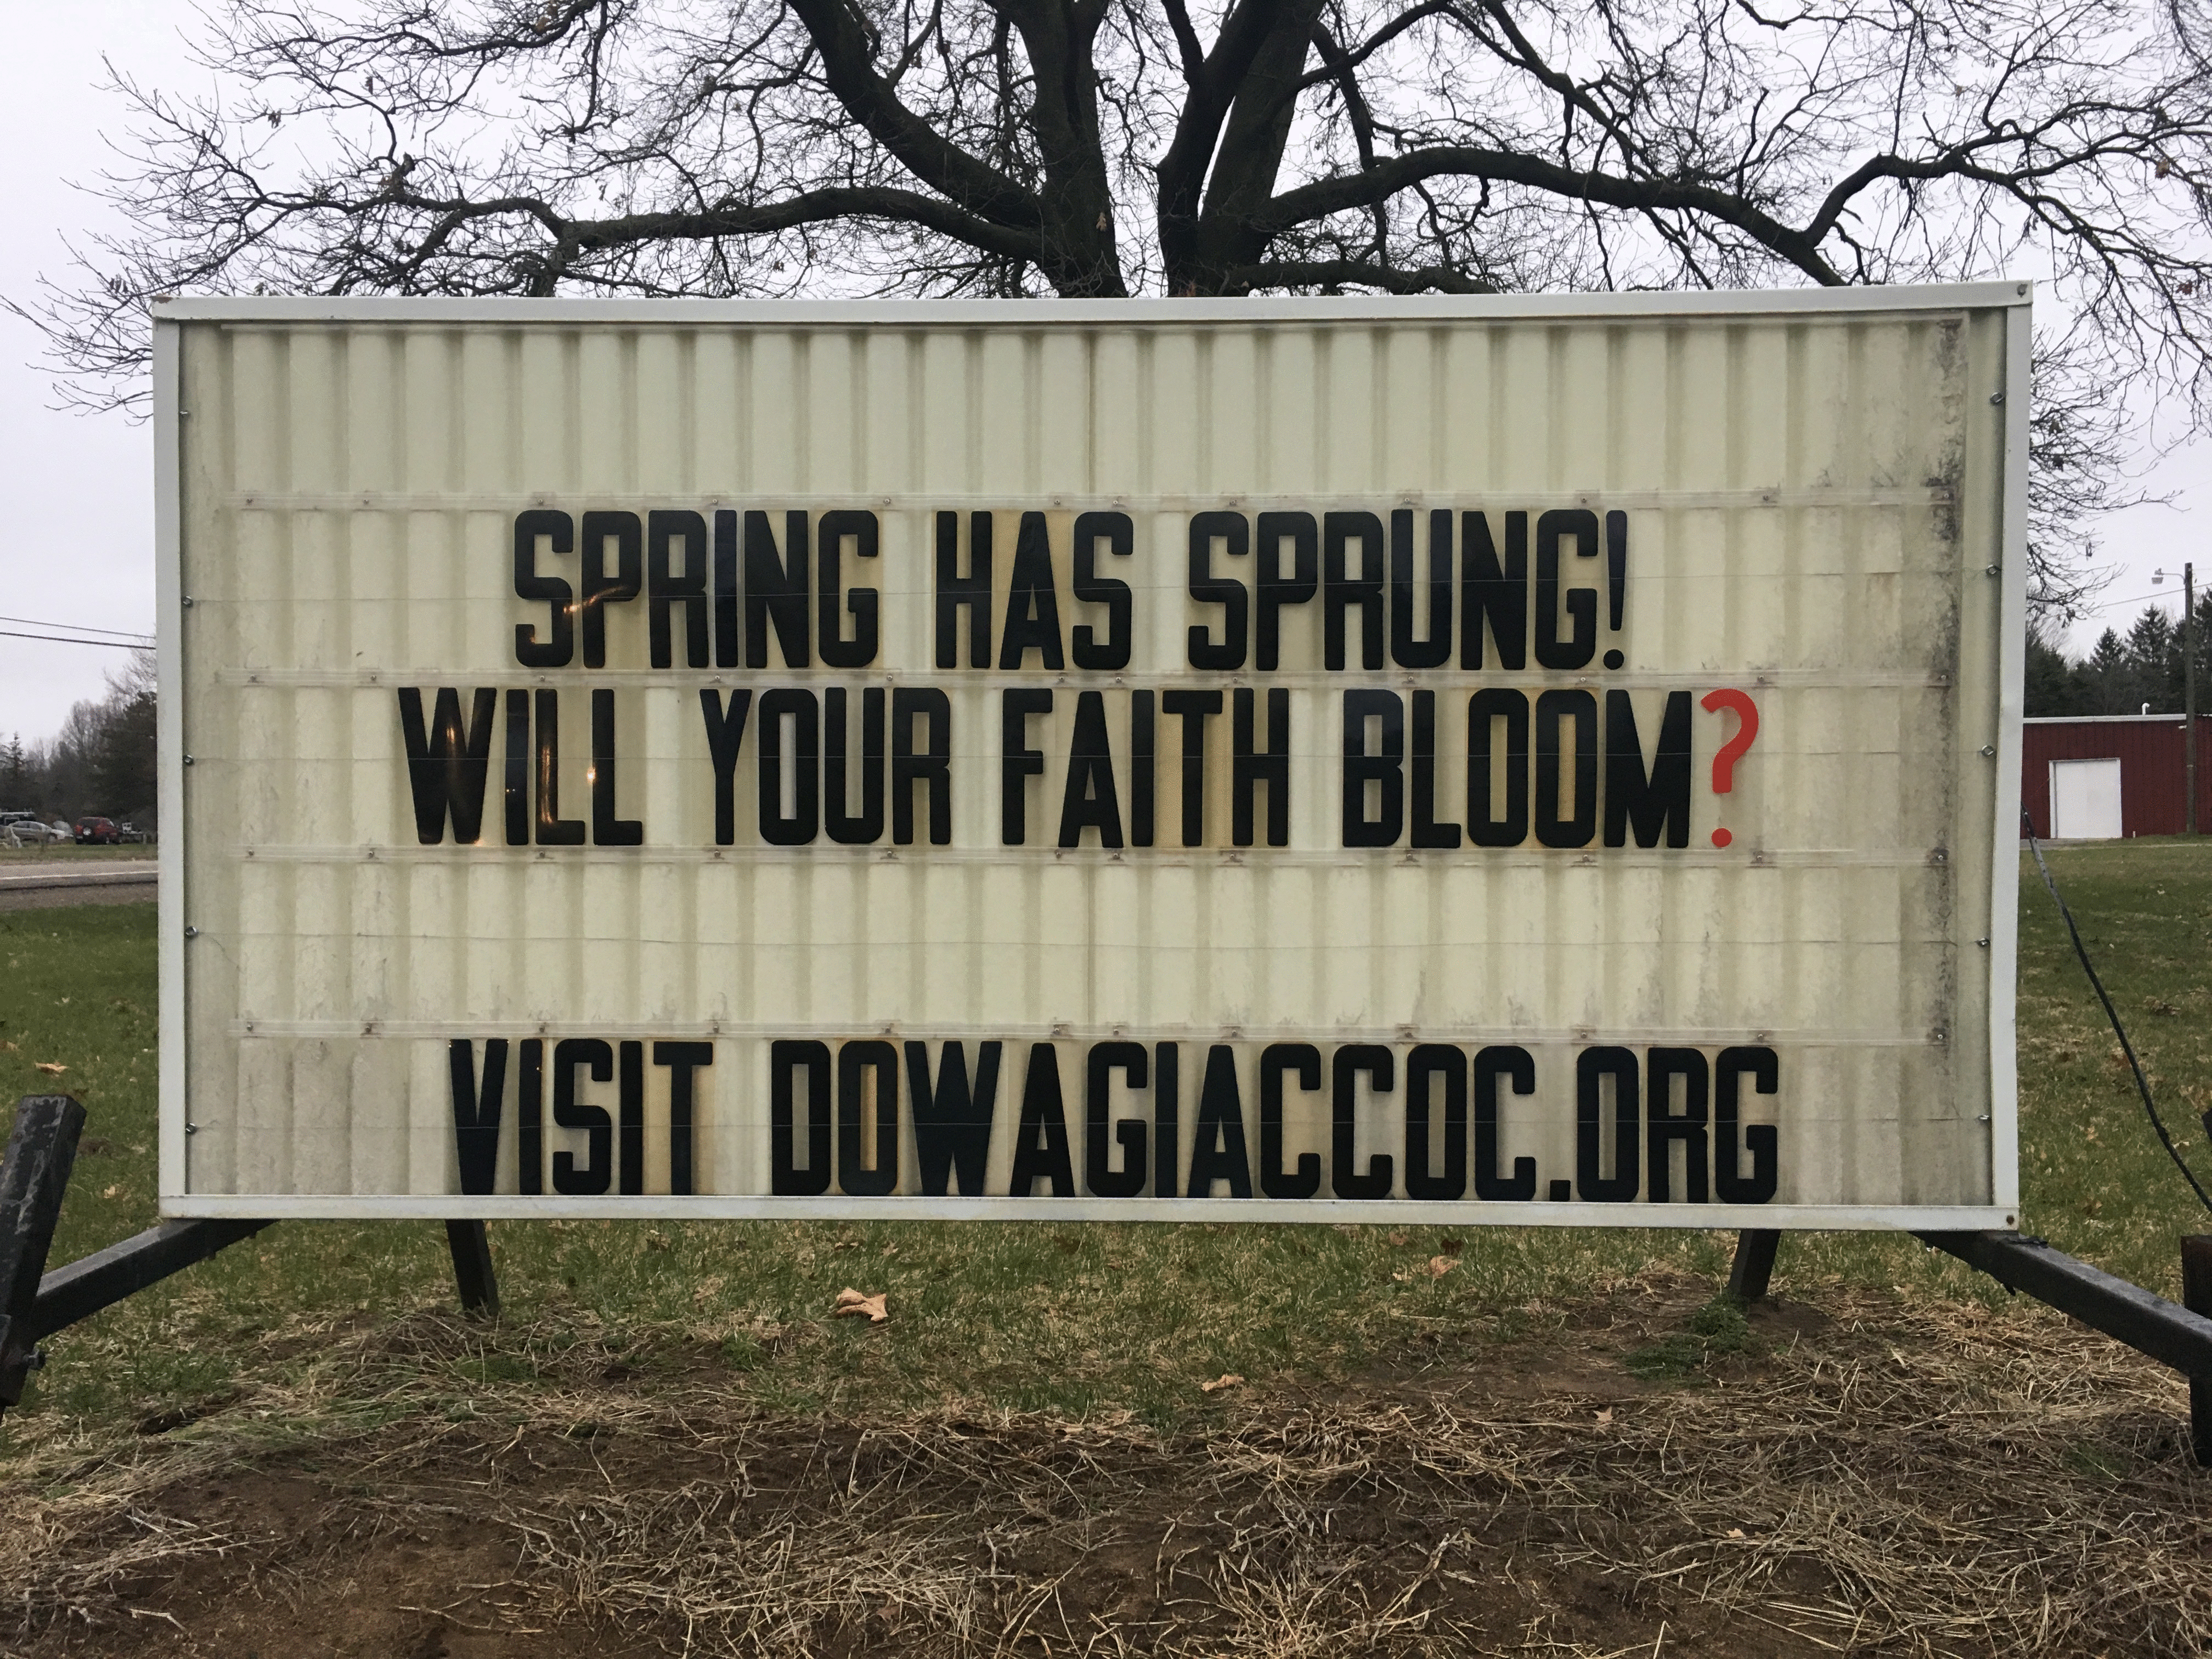 Spring has sprung! Will you faith bloom?